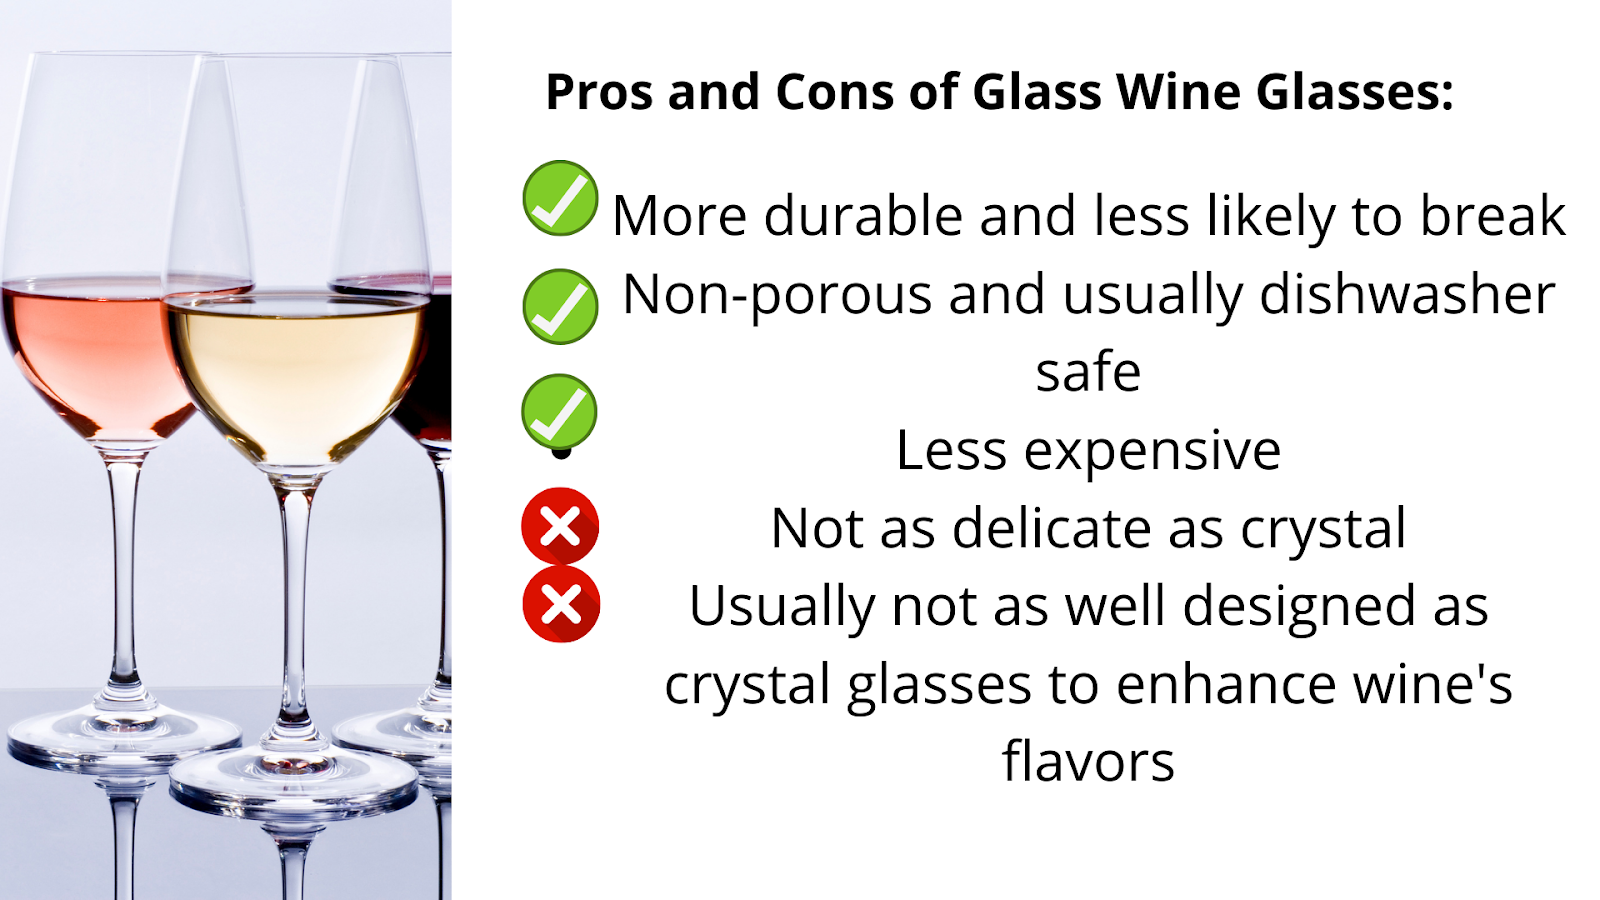 Top 5 Luxury Wine Glasses to Buy Online - Accent Mirror